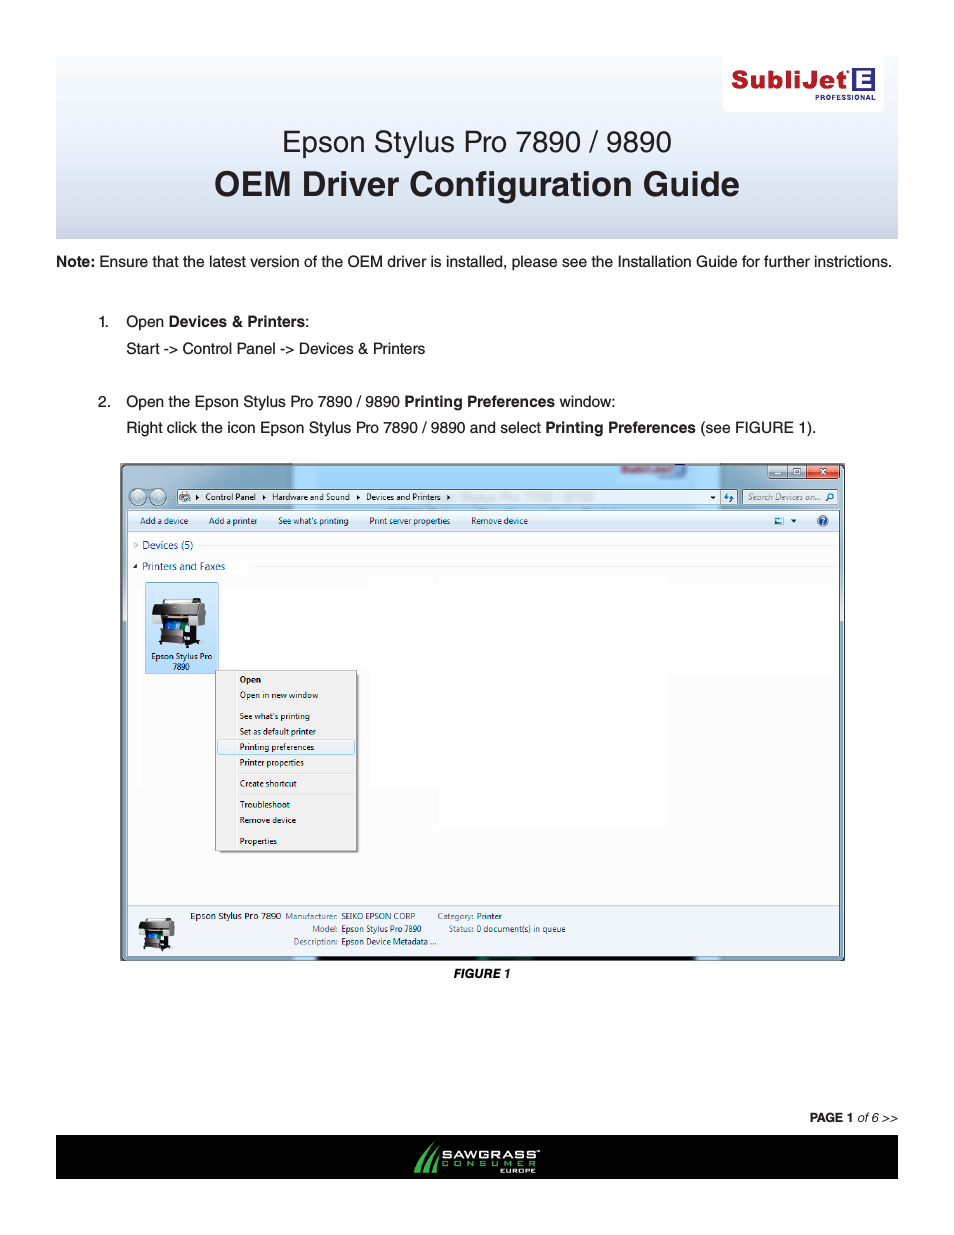 SubliJet E Epson Stylus Pro 9890 (Windows ICC Profile Setup): Driver Configuration Guide